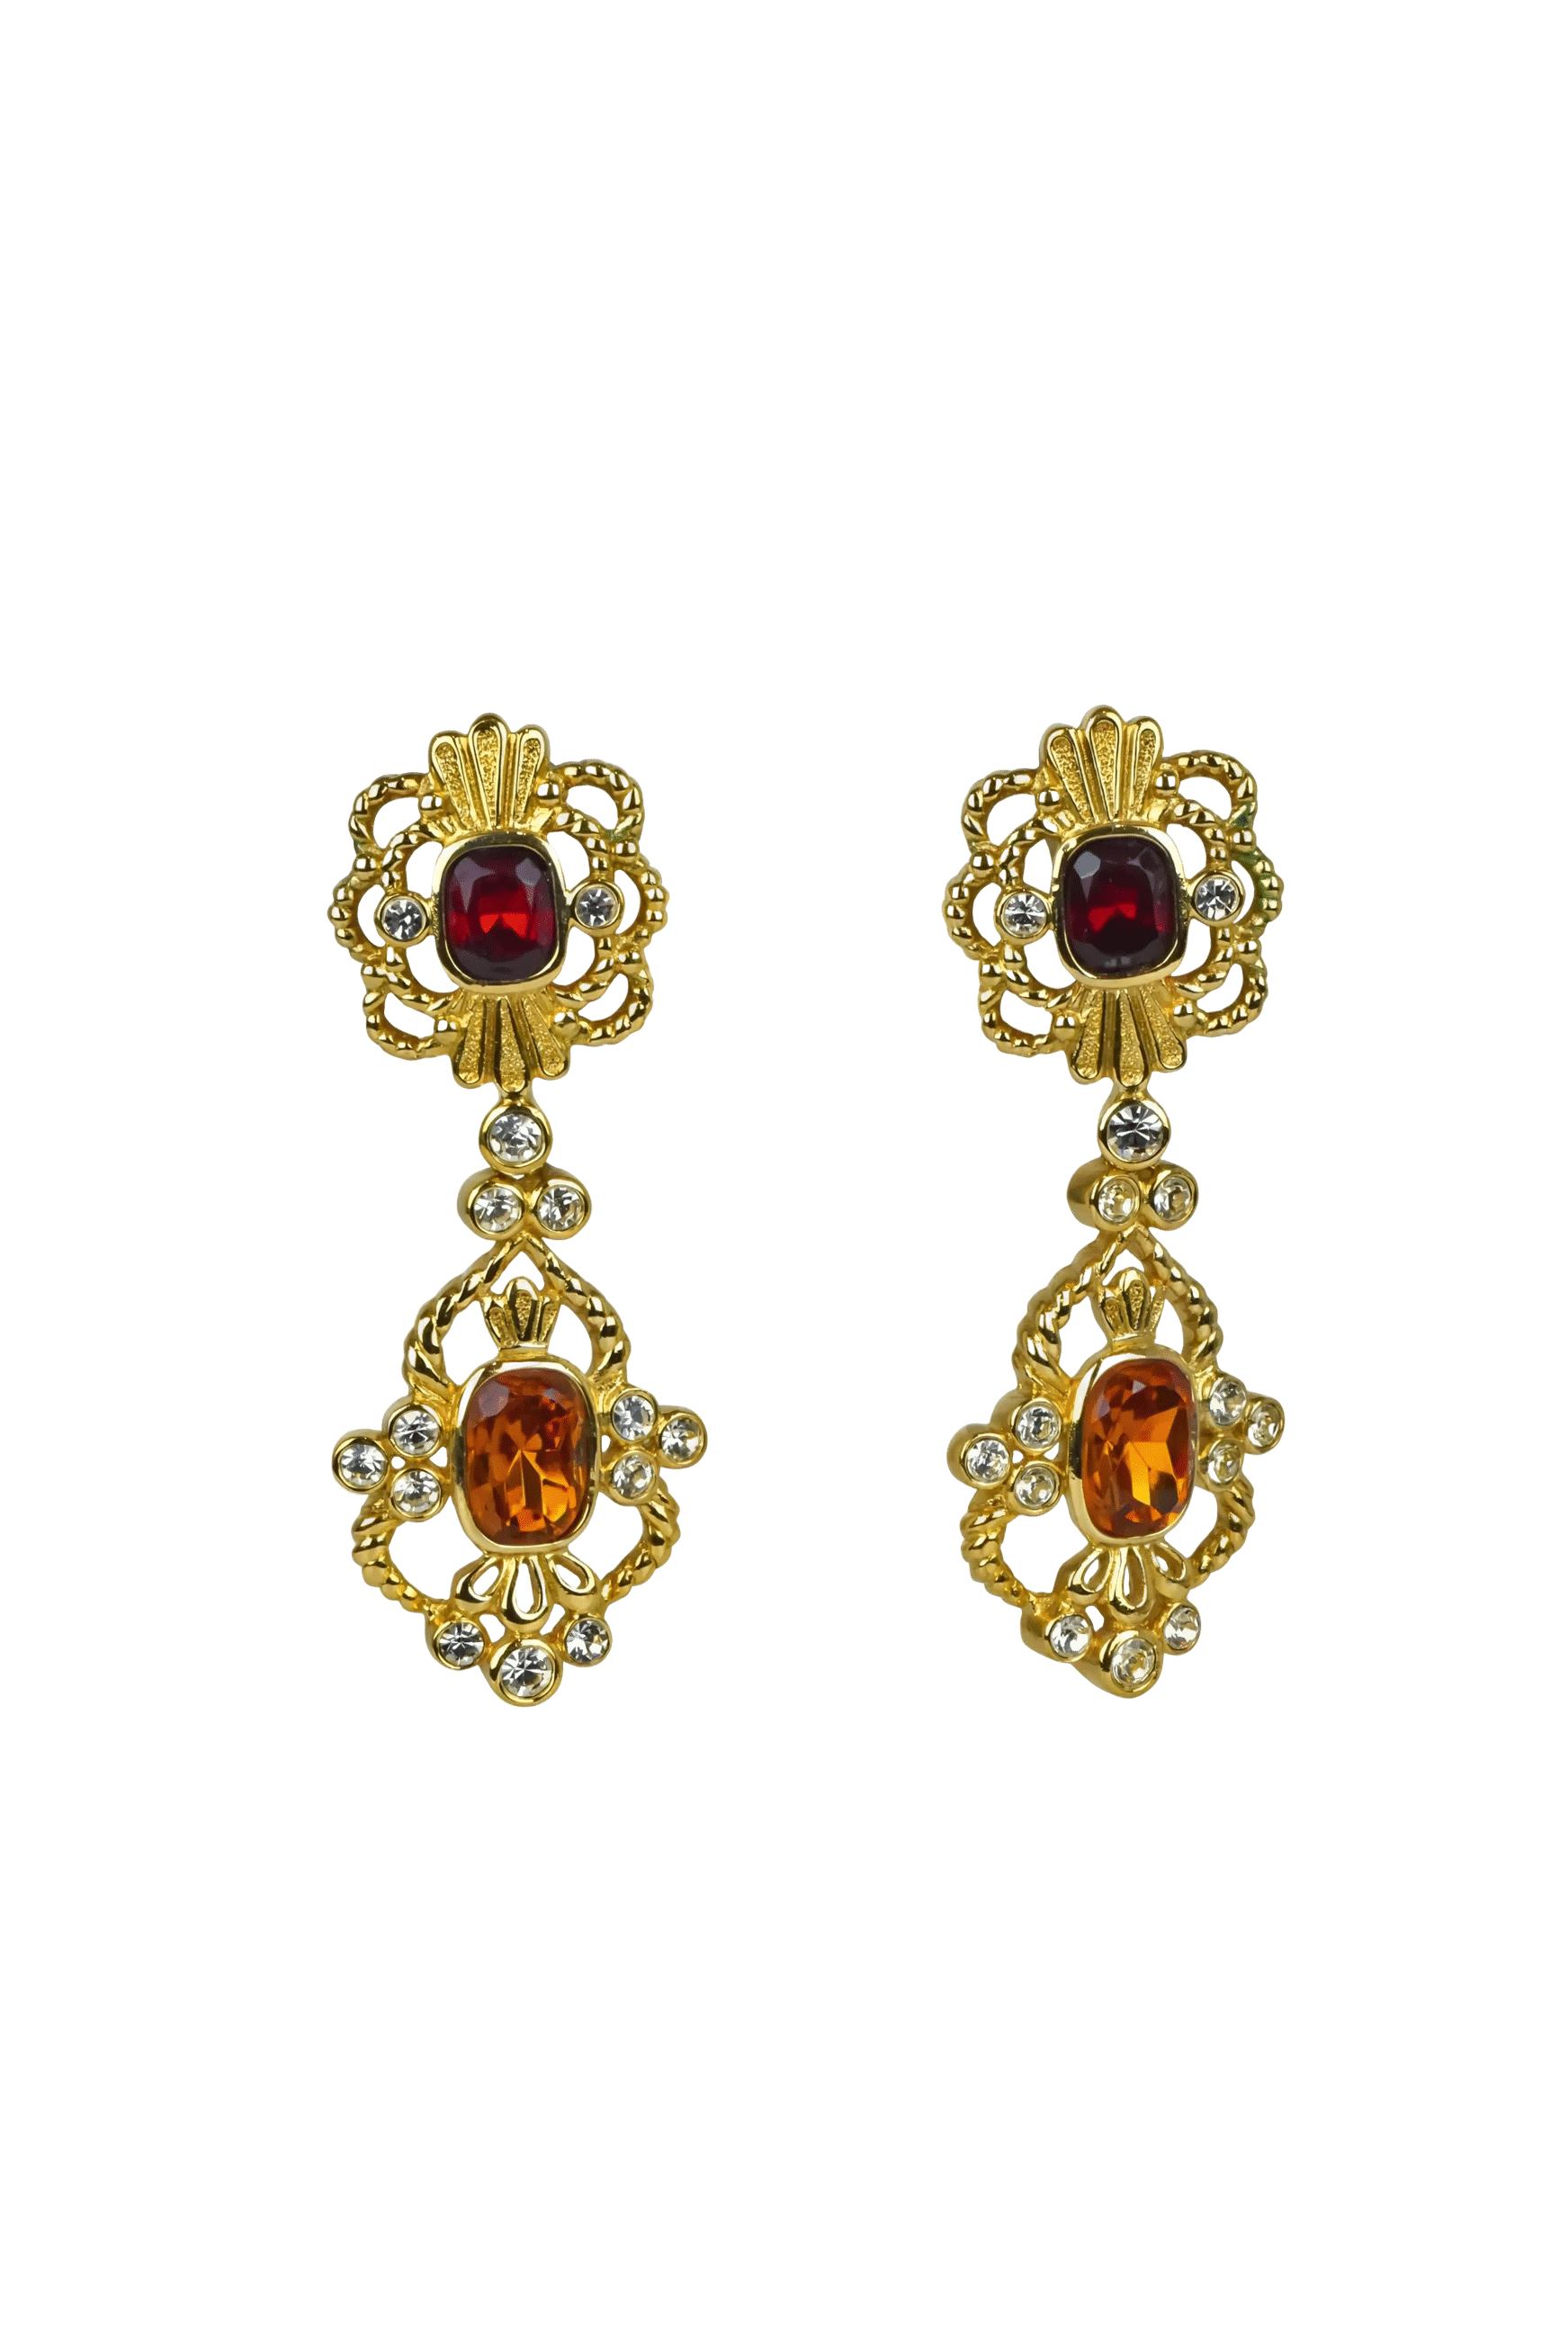 Christian Dior Rare Vintage Crystal Embellished Earrings 1960's-1970's